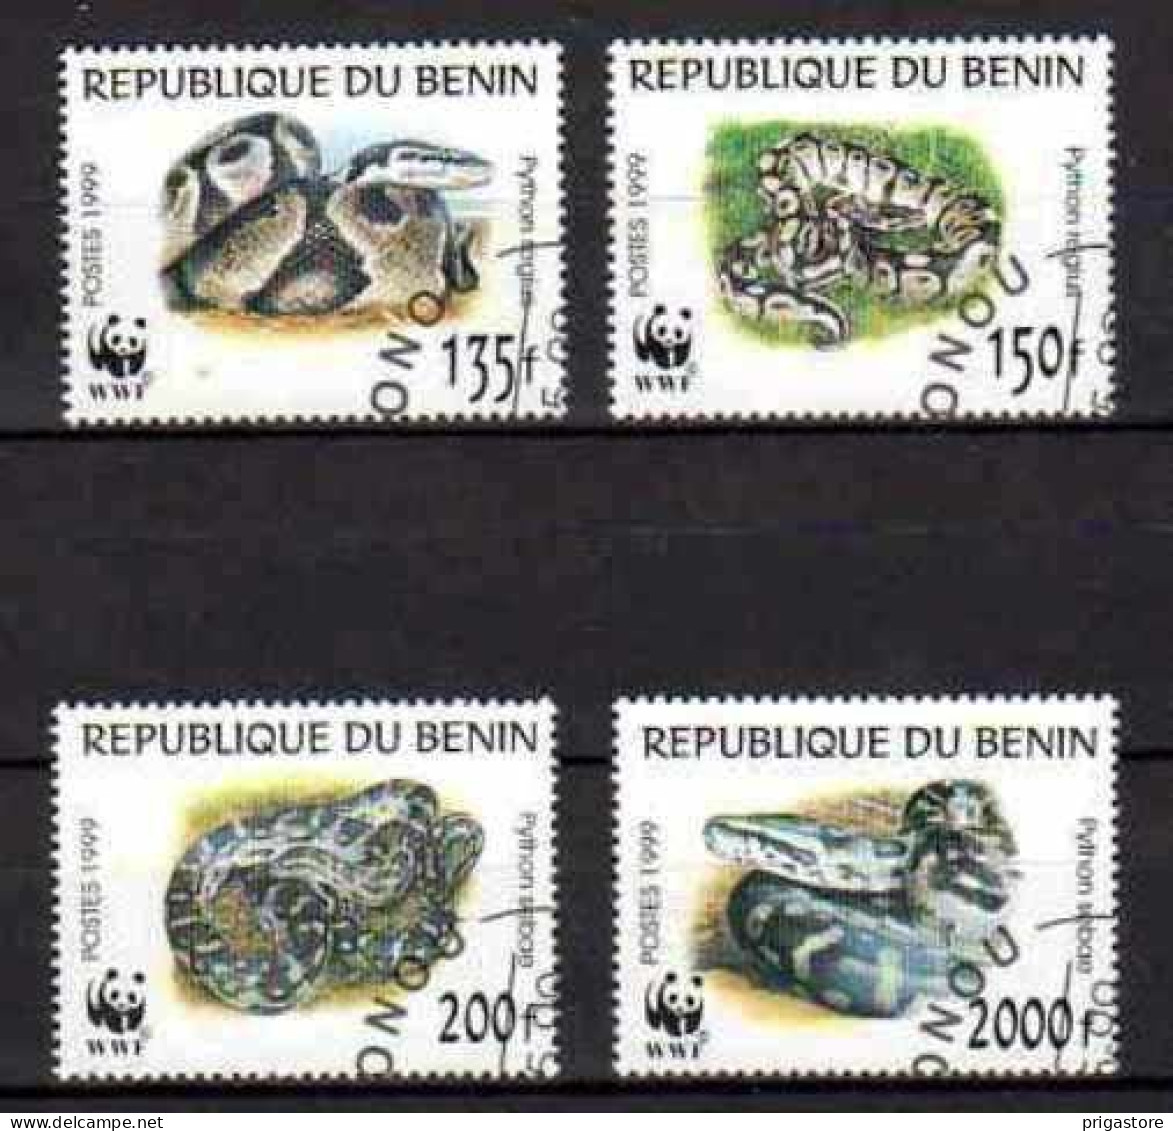 Animaux Serpents Bénin 1999 (40) Yvert N° 898 à 901 Oblitéré Used - Snakes